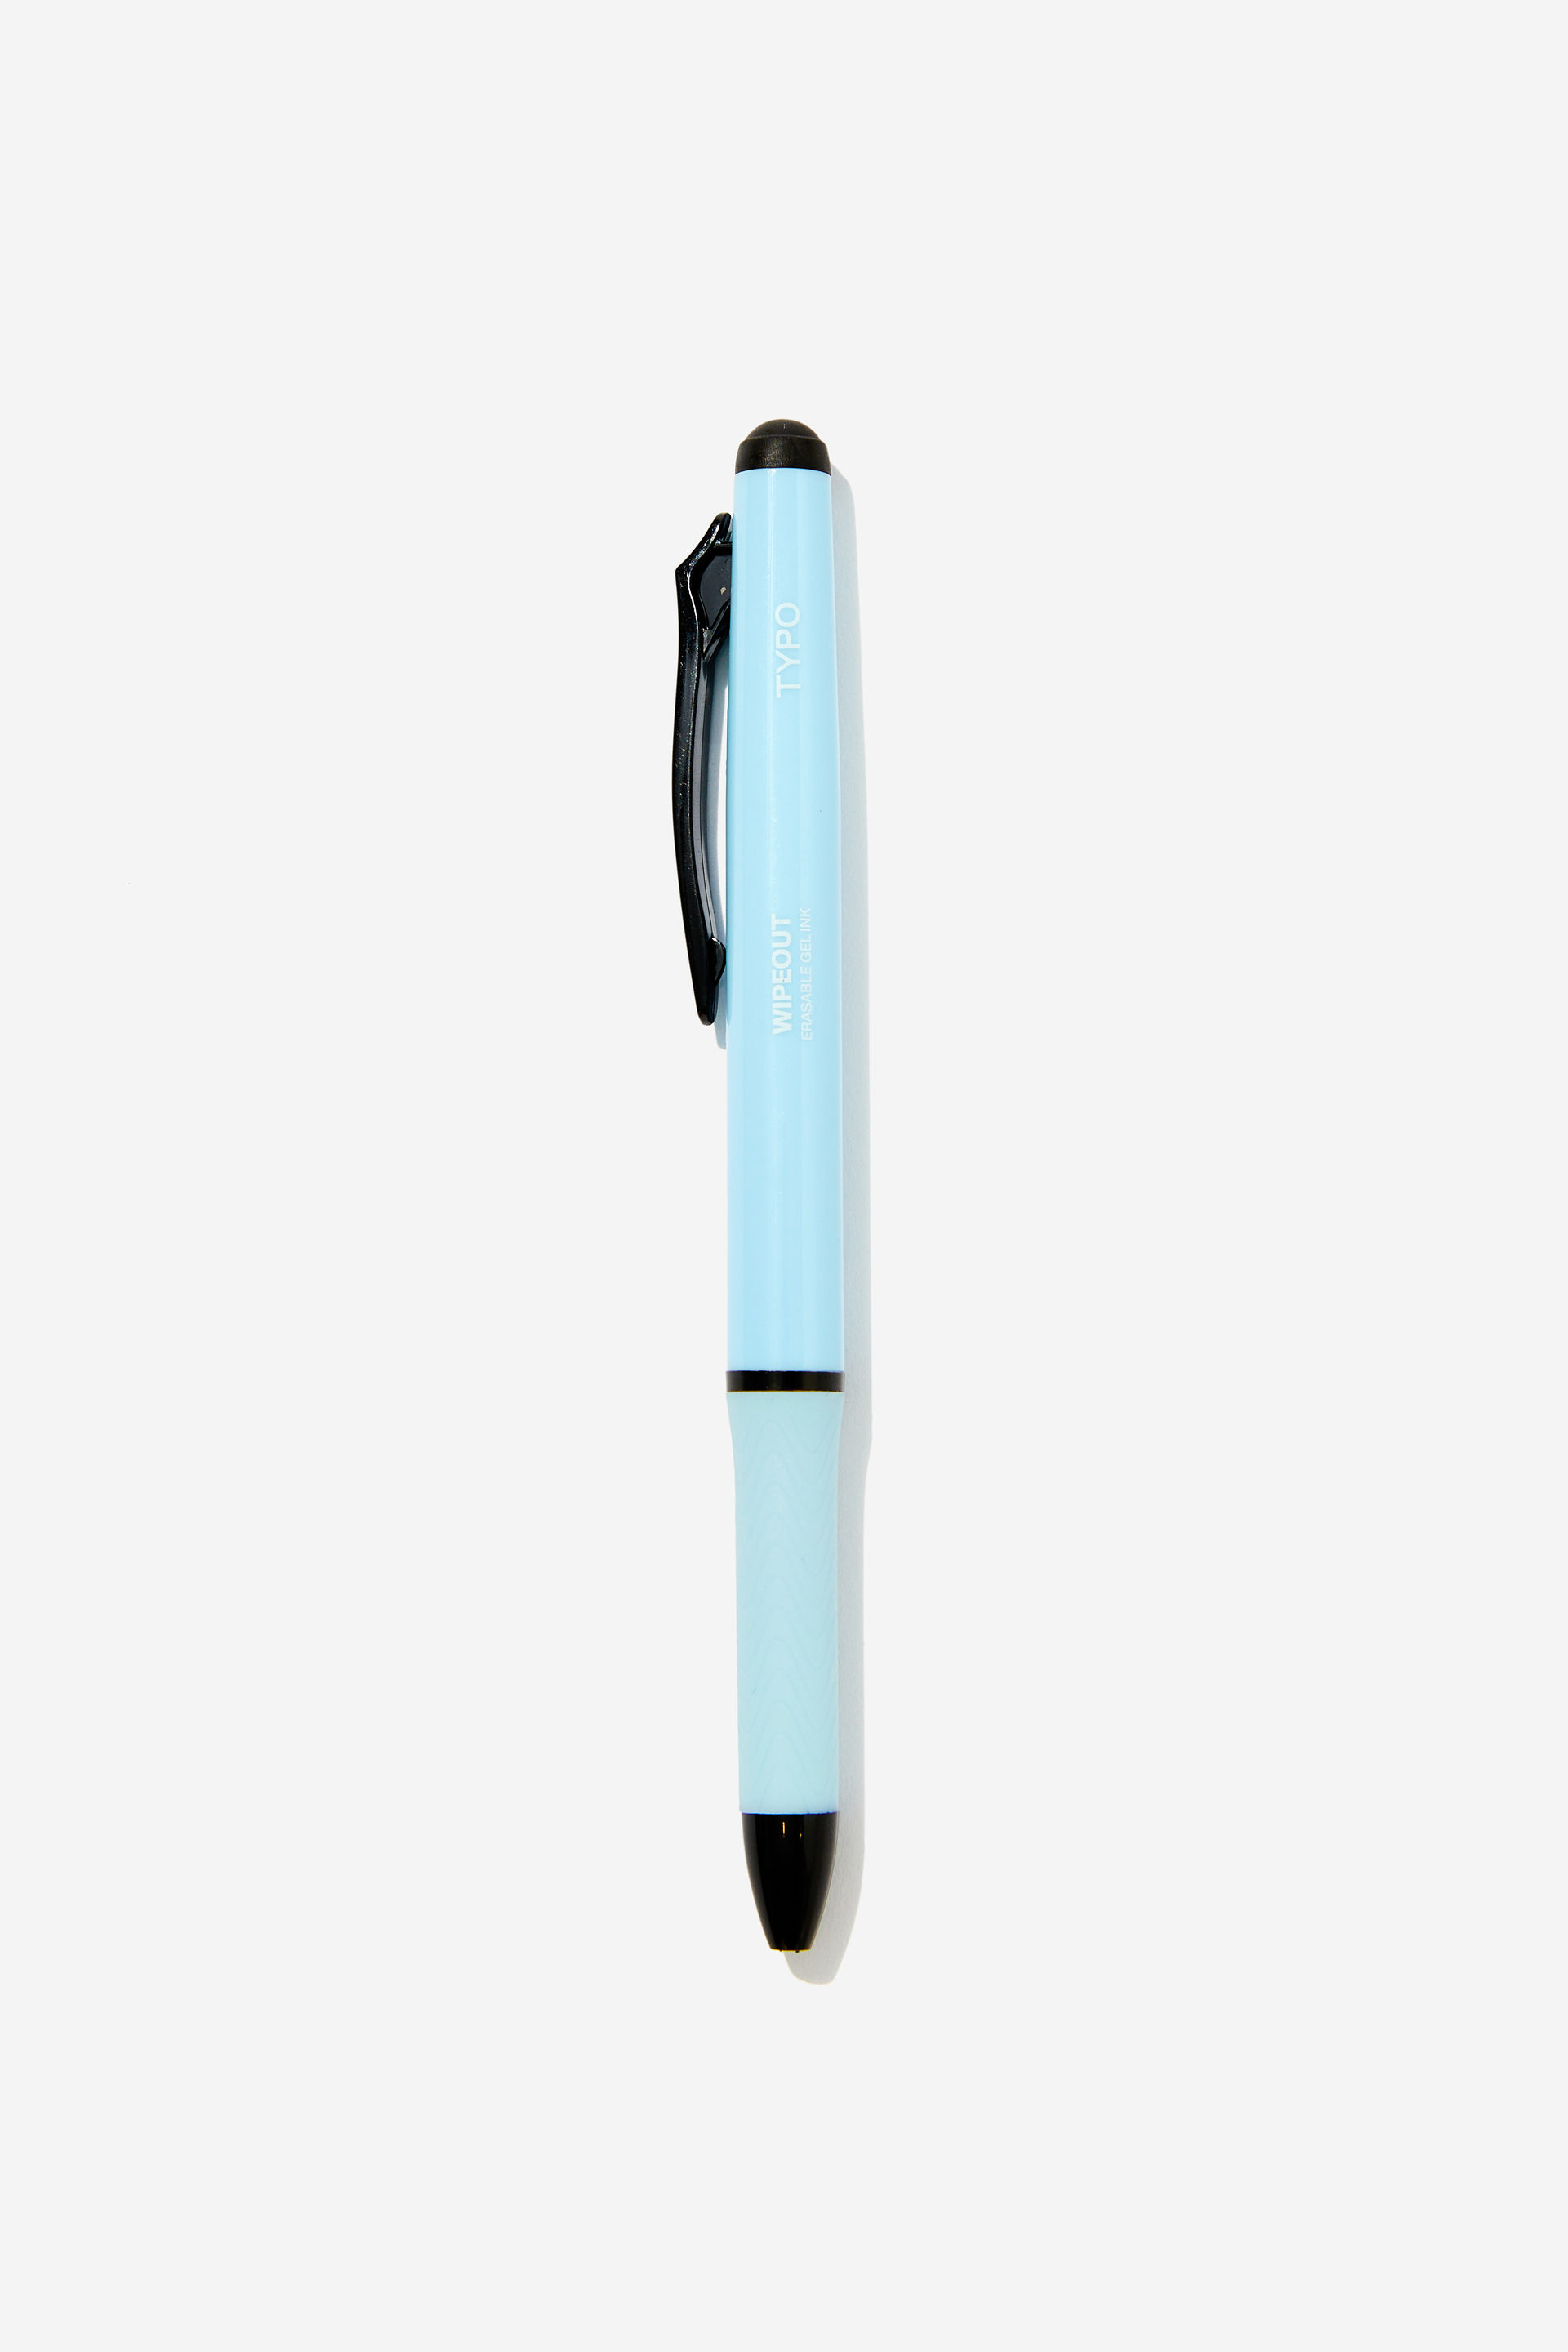 Typo - Wipeout Gel Pen - Arctic blue